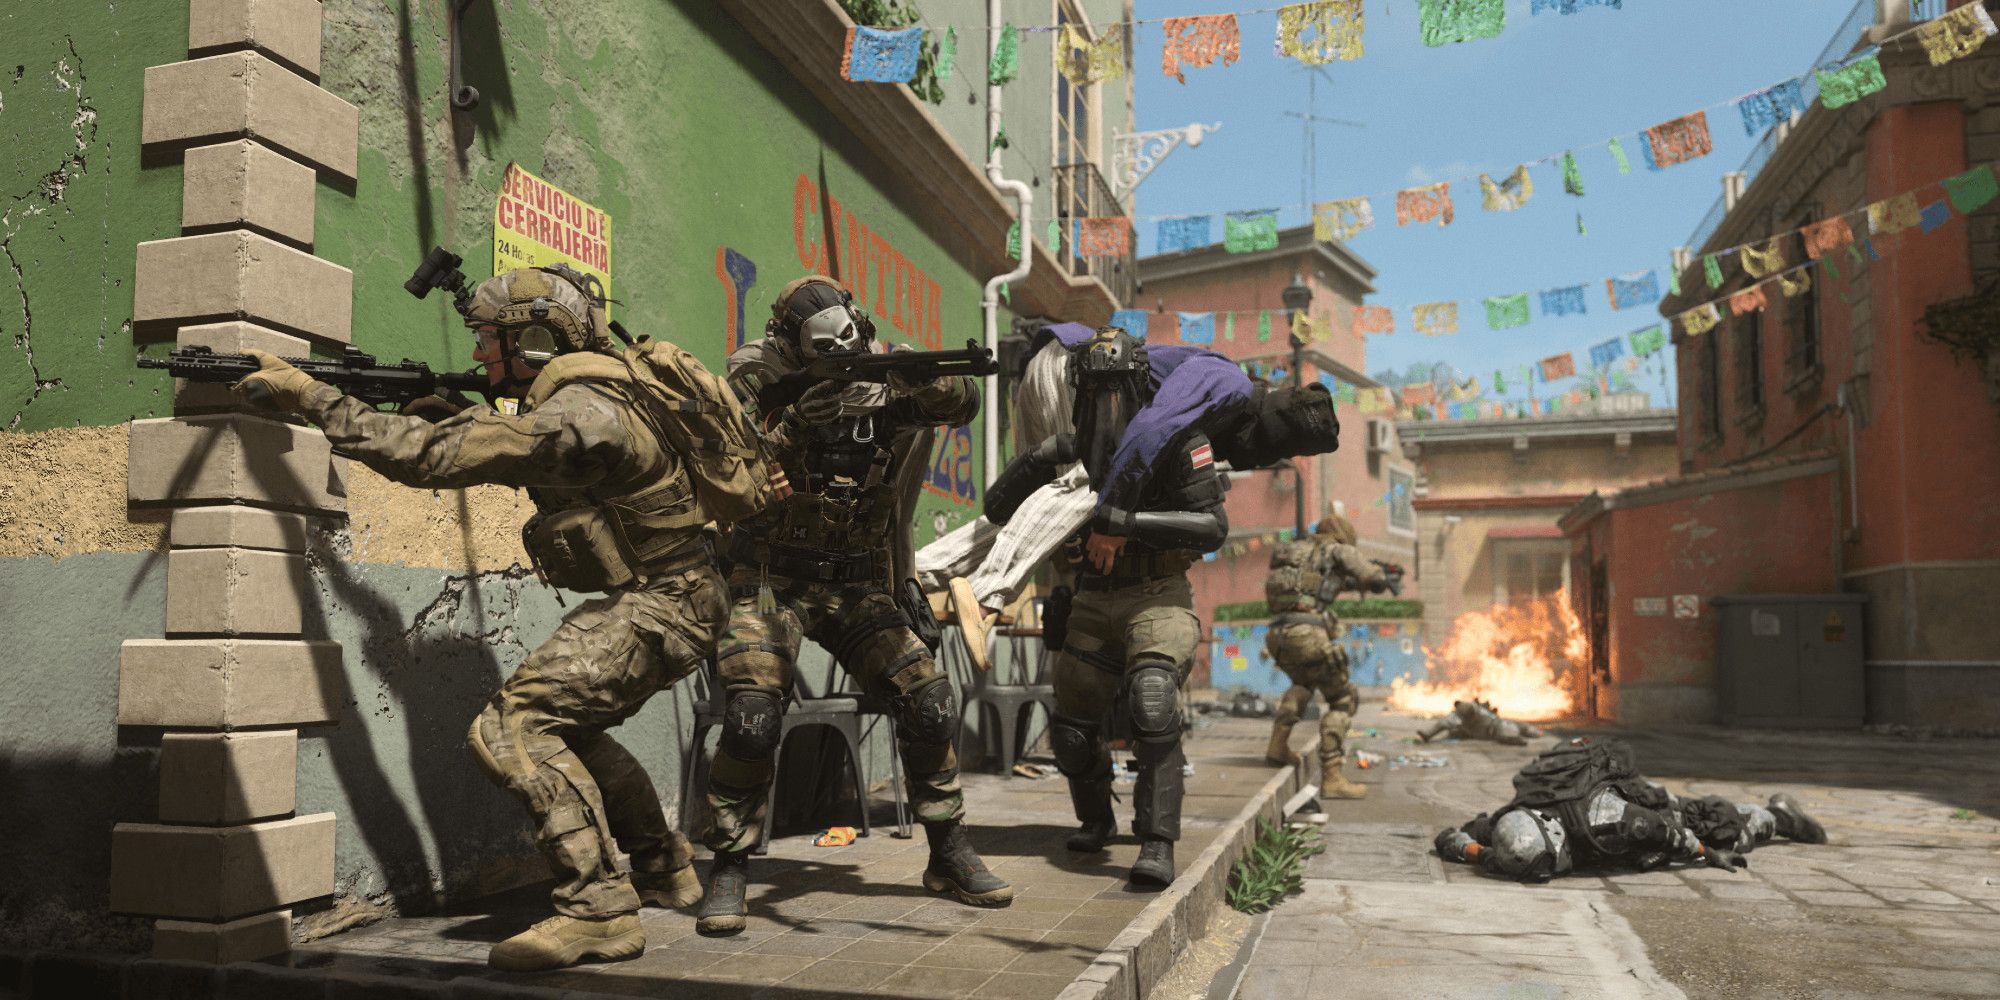 Screenshot of a Mercado prisoner rescue from Modern Warfare 2